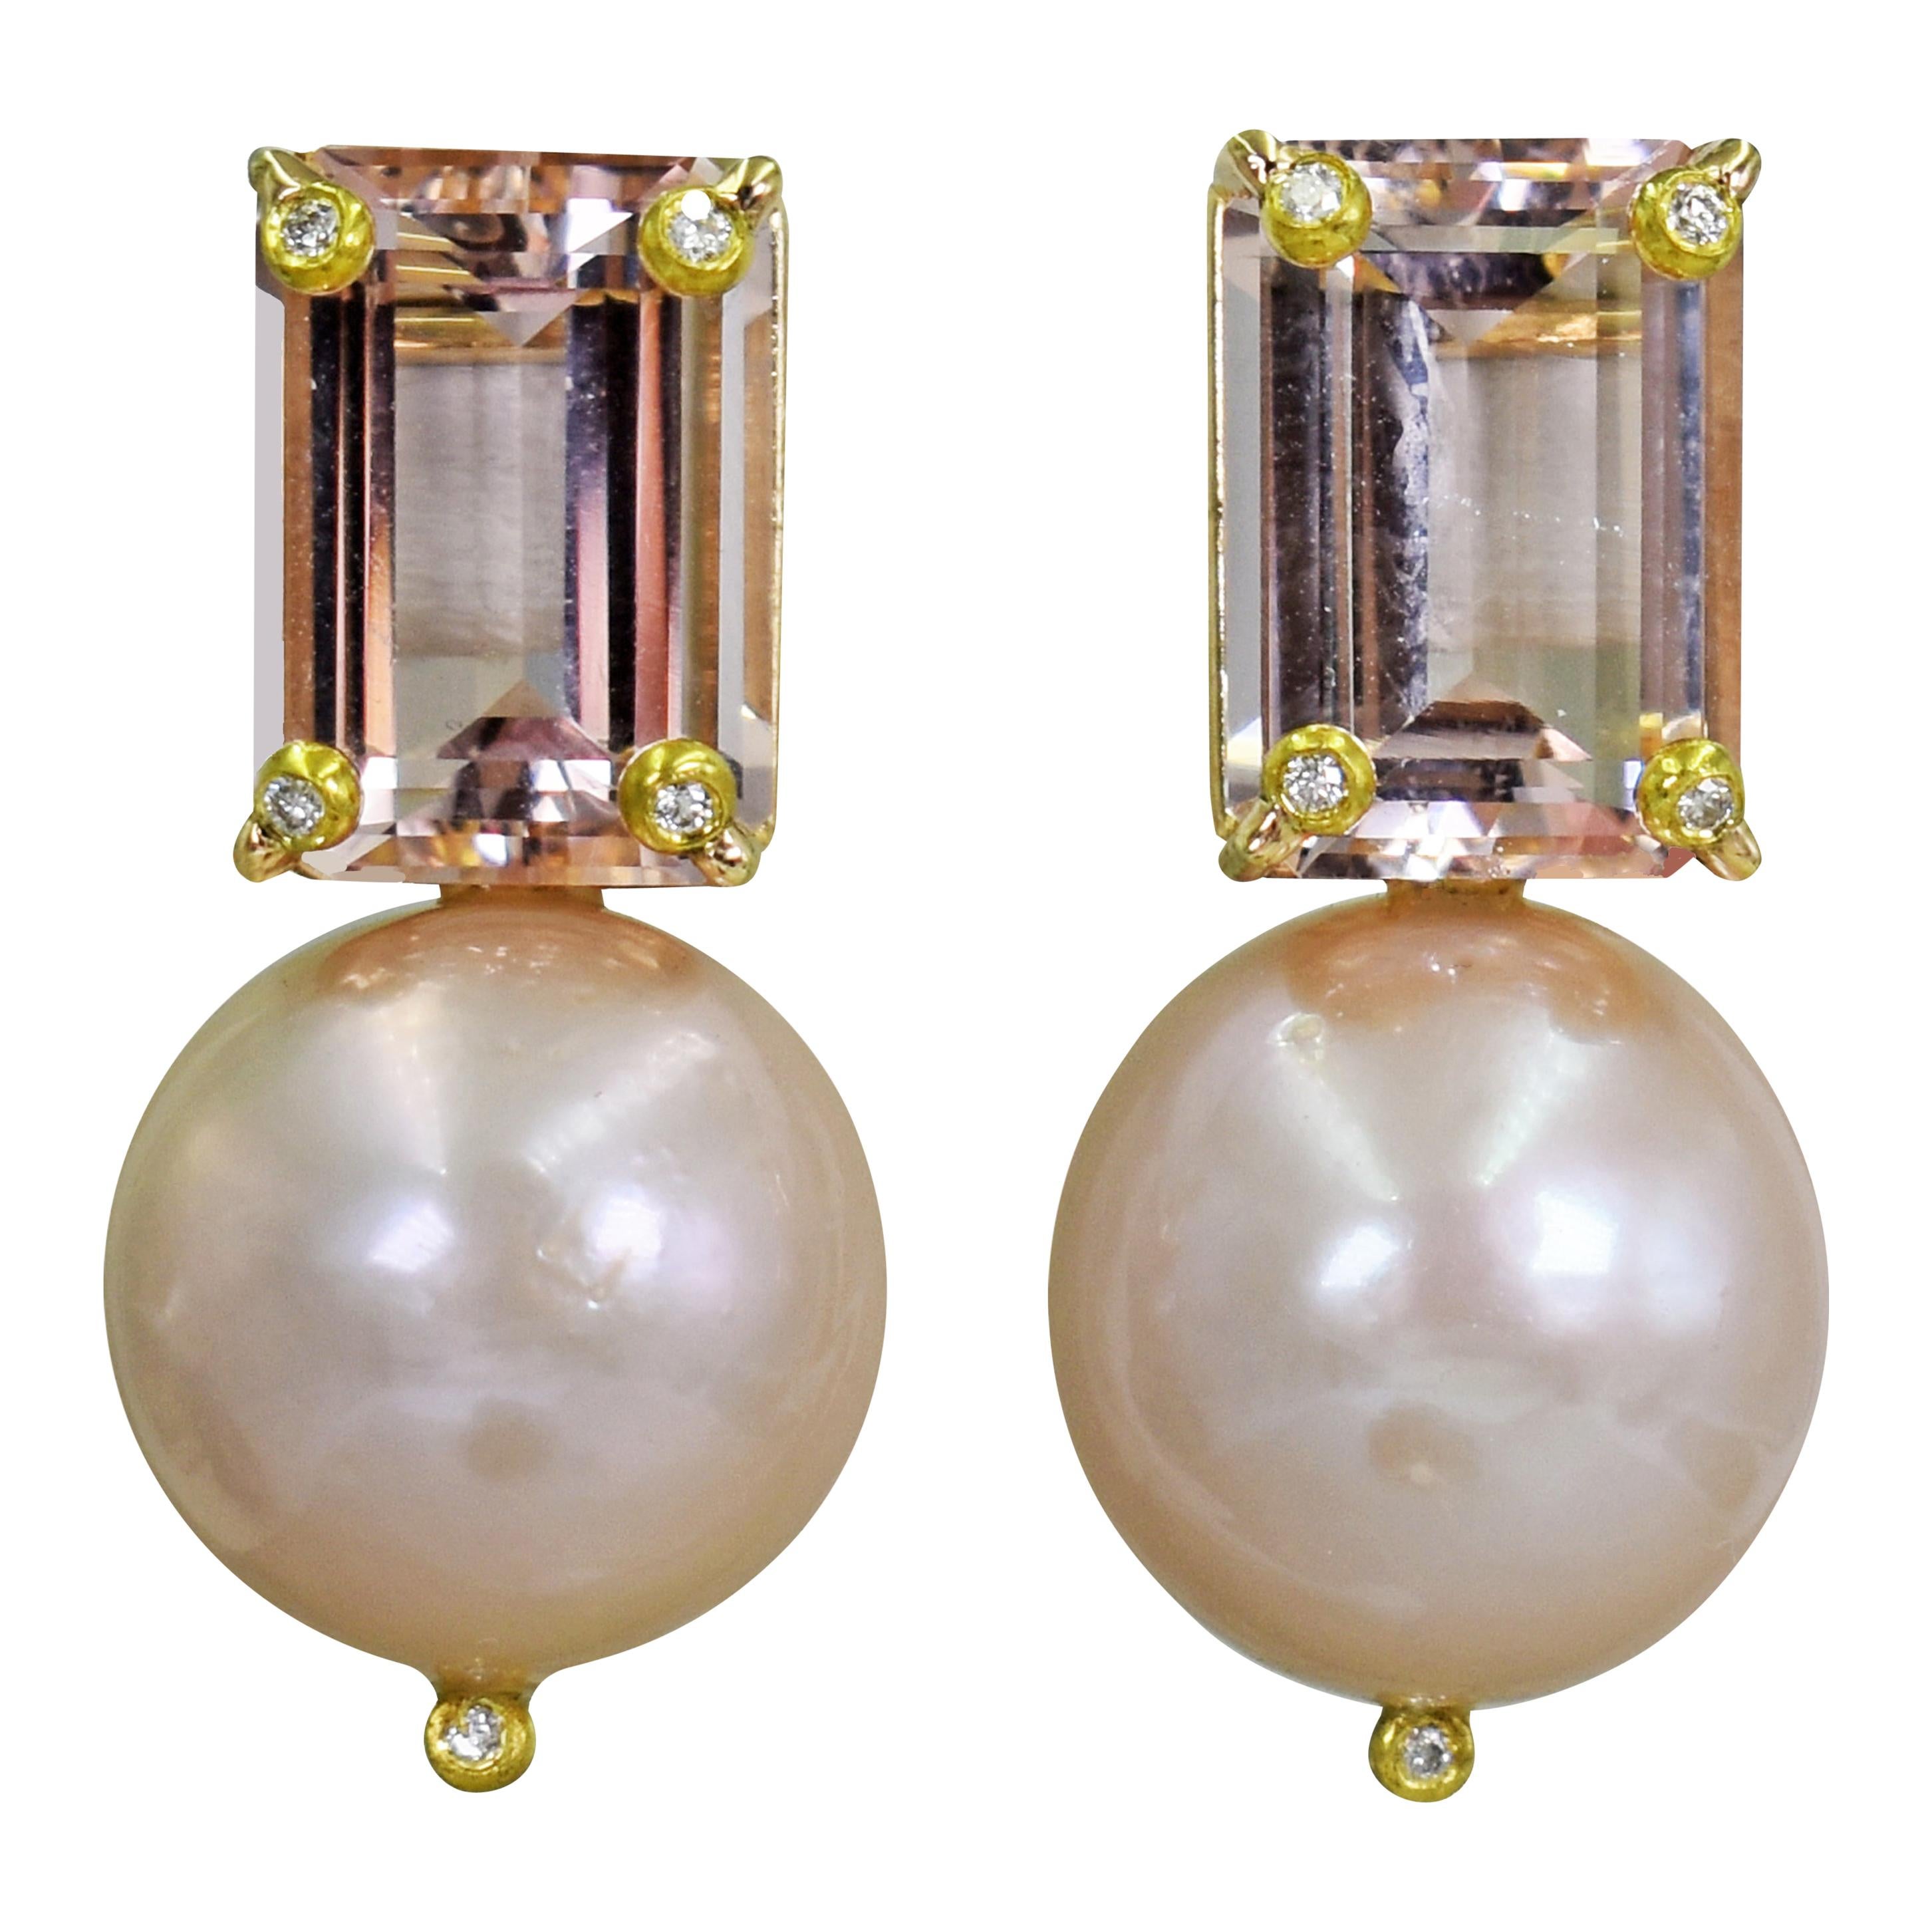 Clous d'oreilles en or 14 carats avec morganite de 12,61 carats, diamants et perle rose